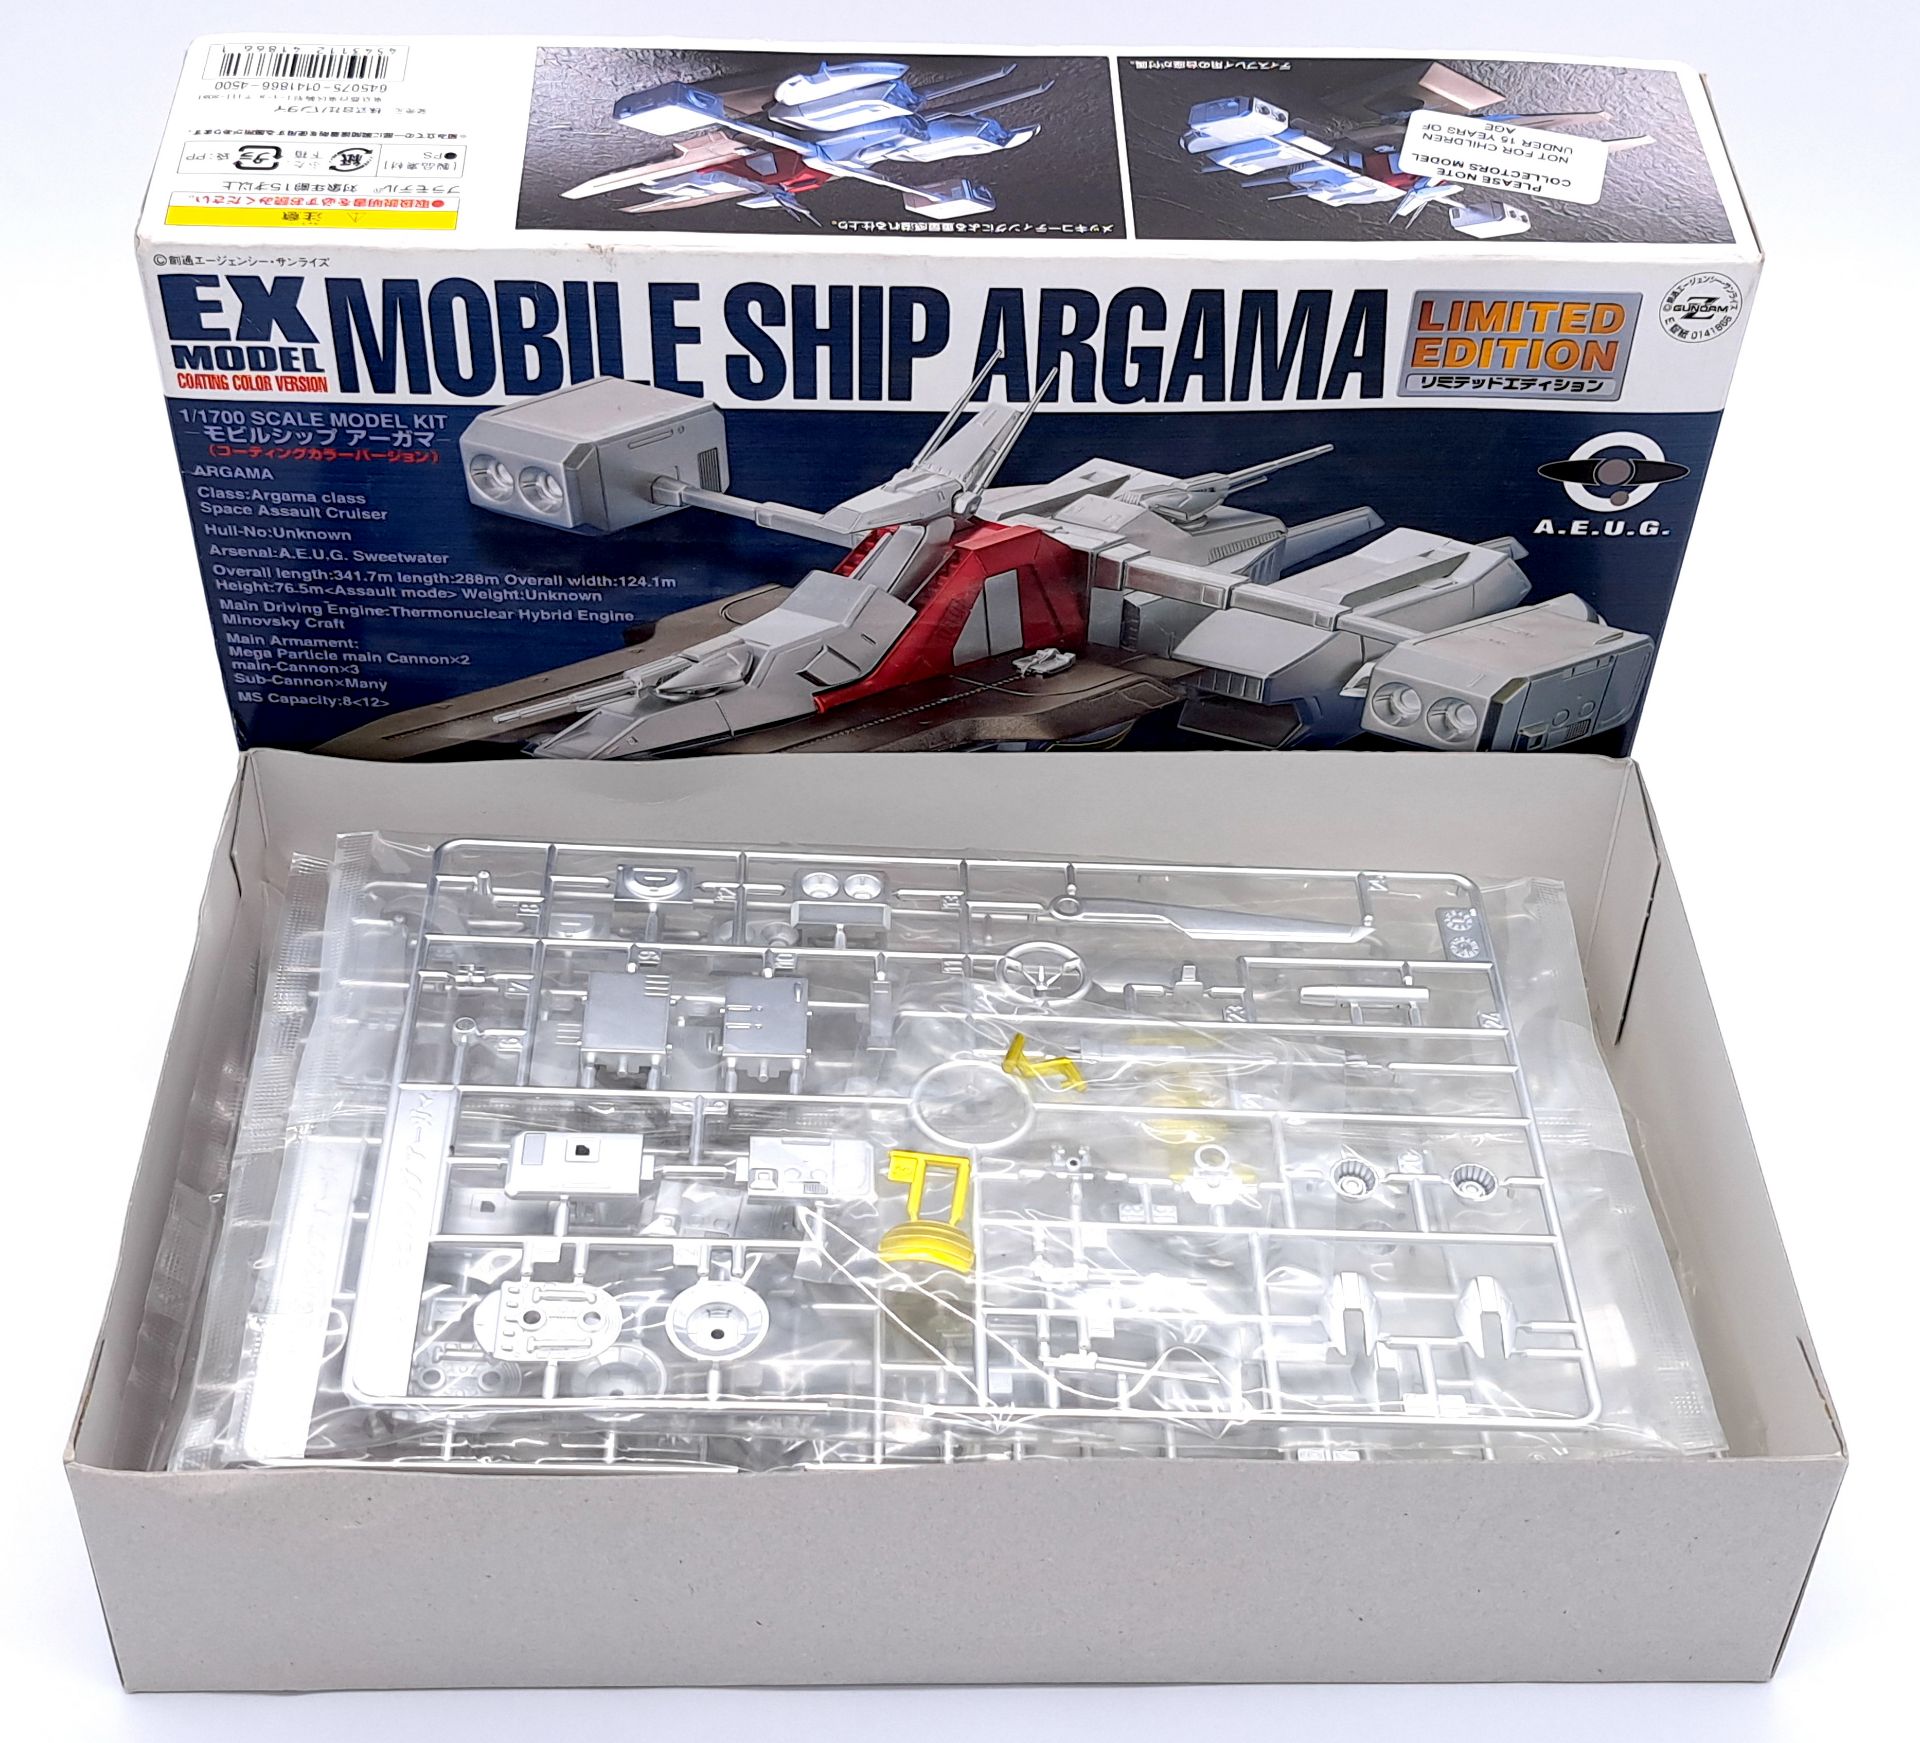 Bandai Ex Model Mobile Ship Argama 1/1700 scale limited edition plastic model kit - Image 2 of 2